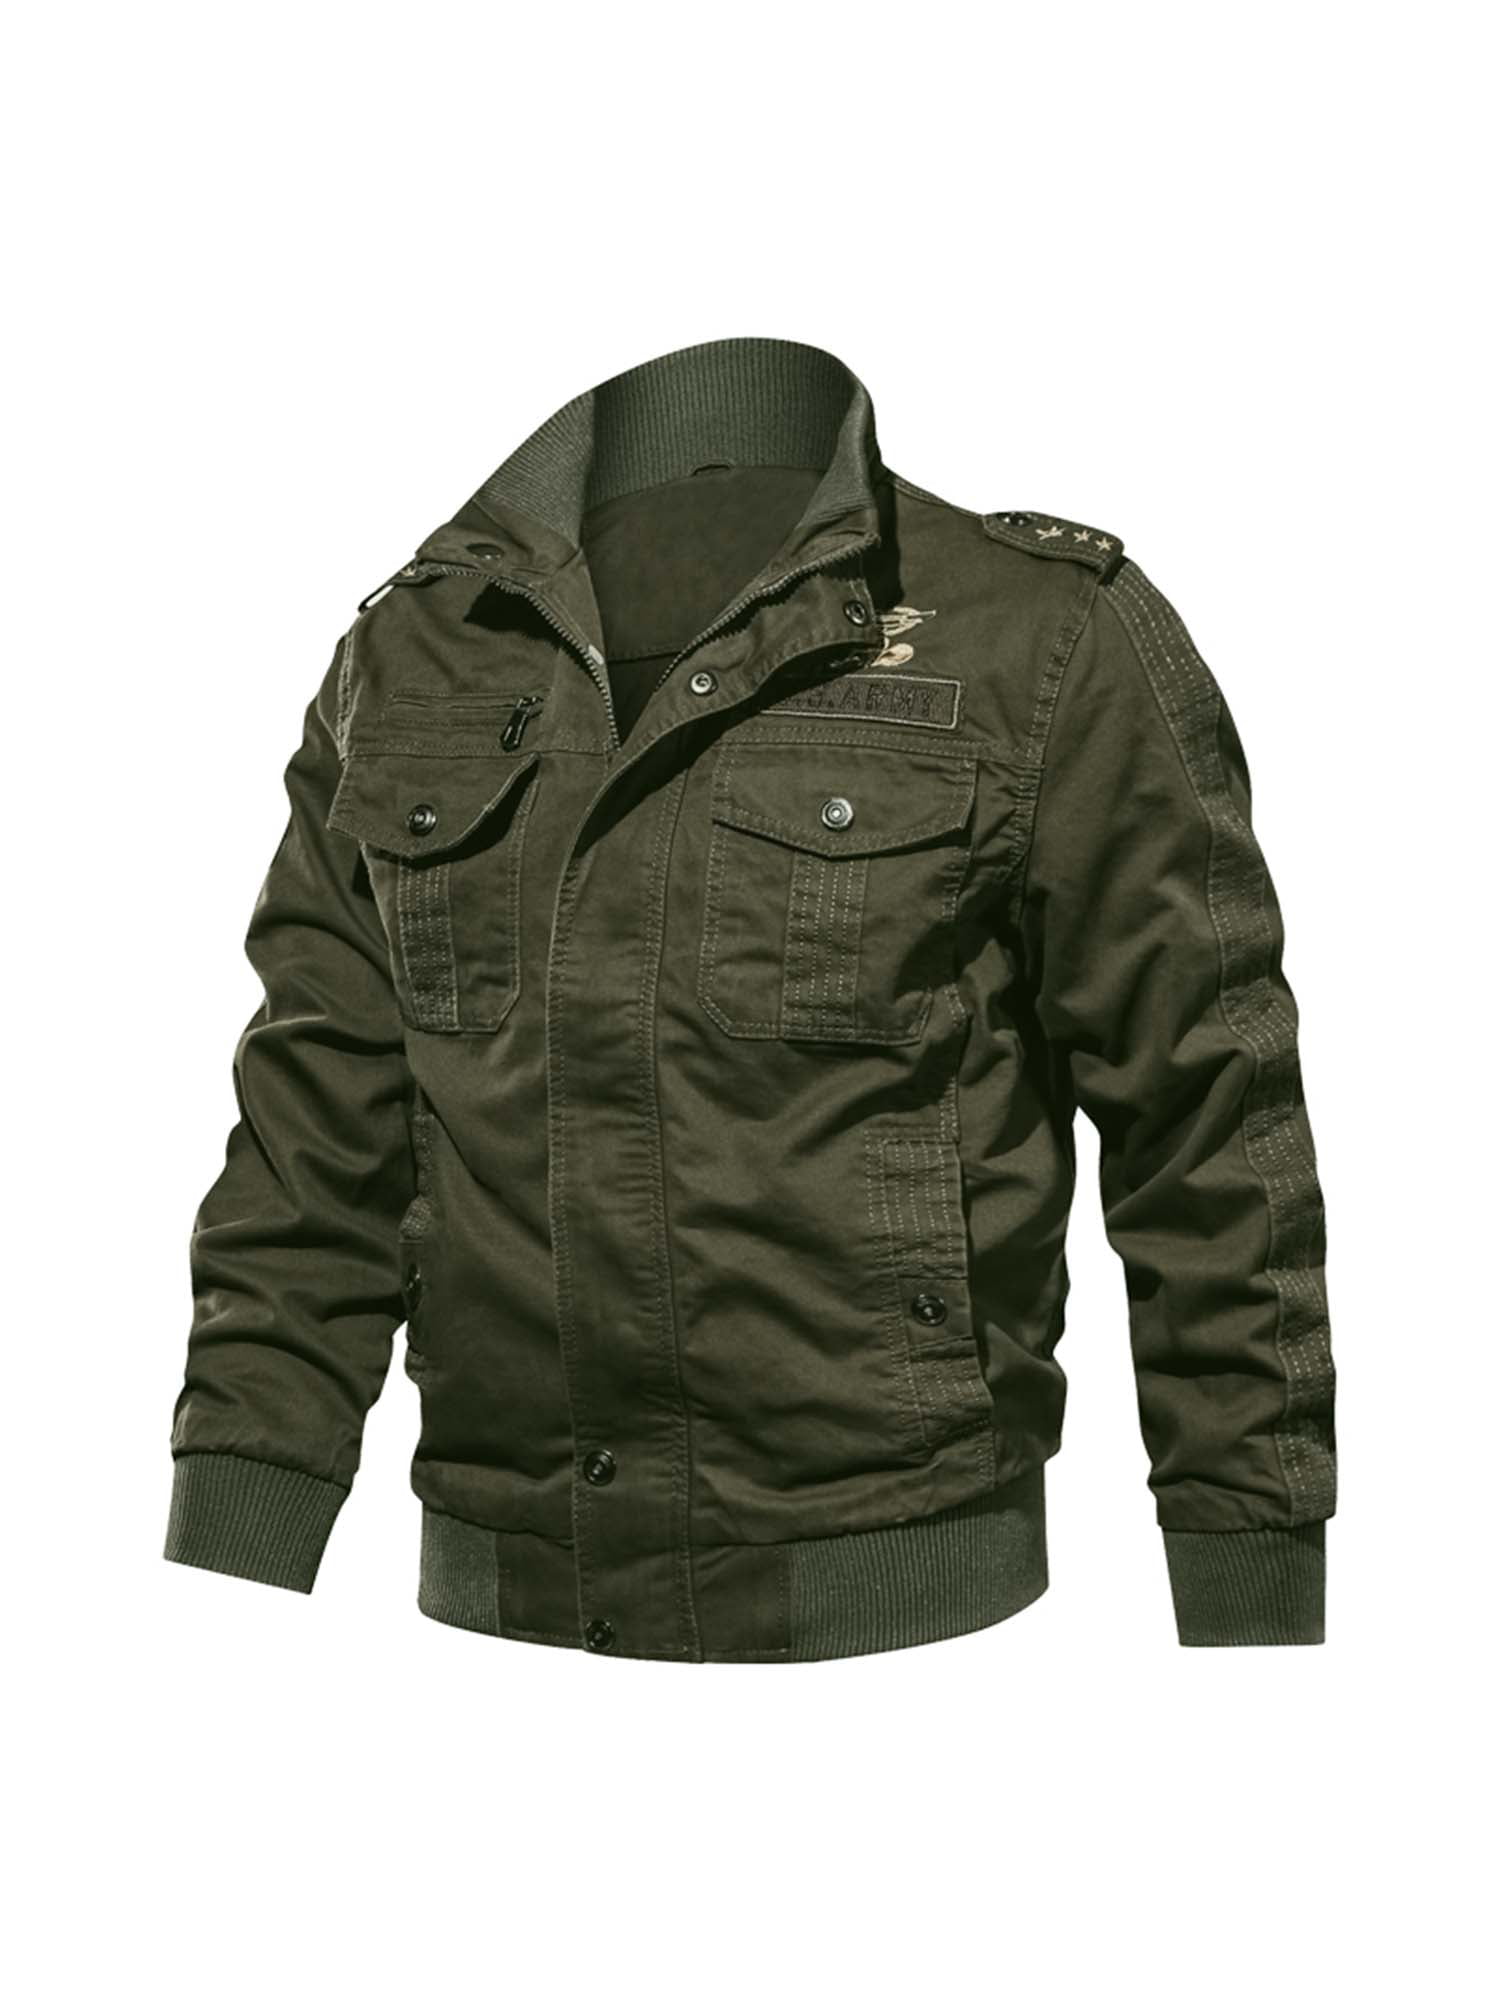 Generic Mens Lightweight Casual Military Windbreaker Jacket Cotton Stand Collar Field Coat